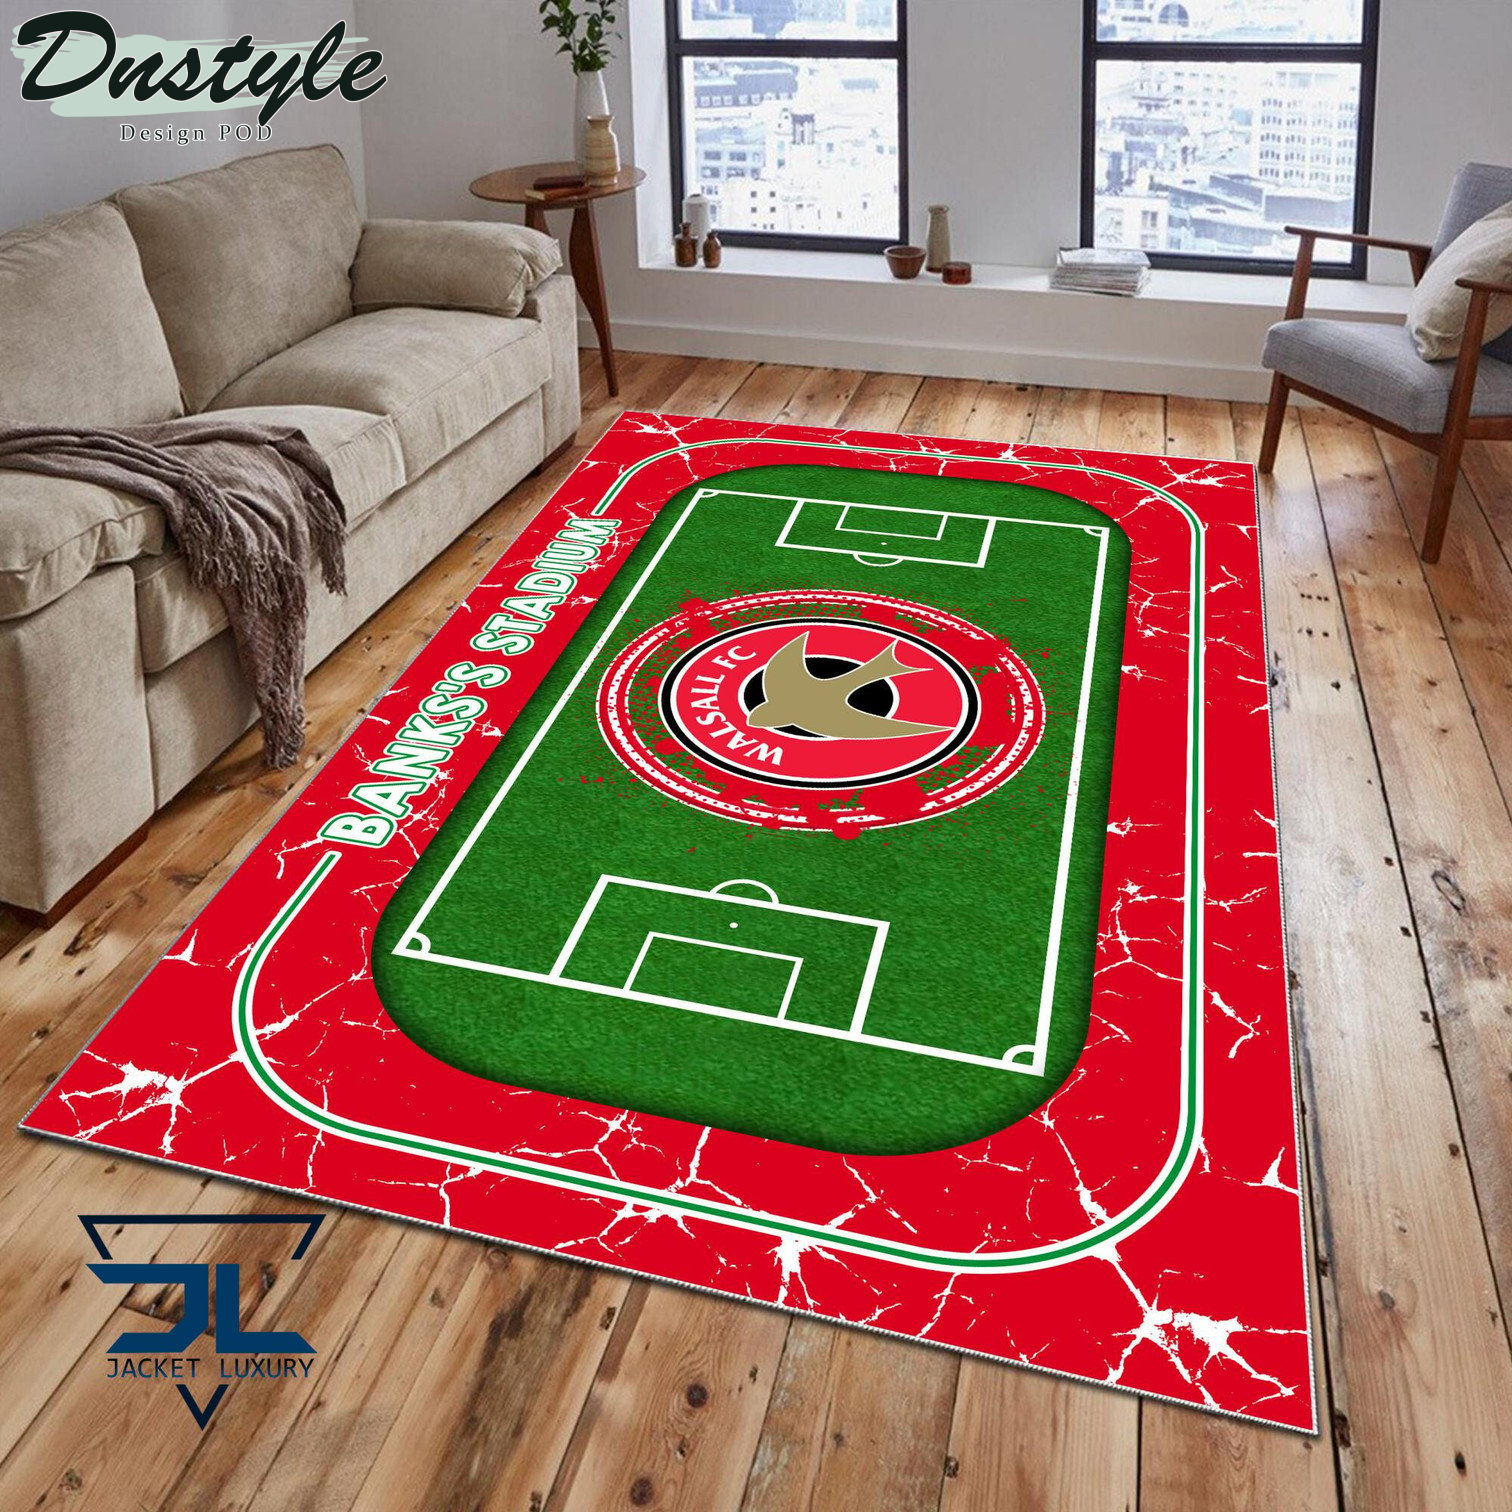 Walsall FC Rug Carpet